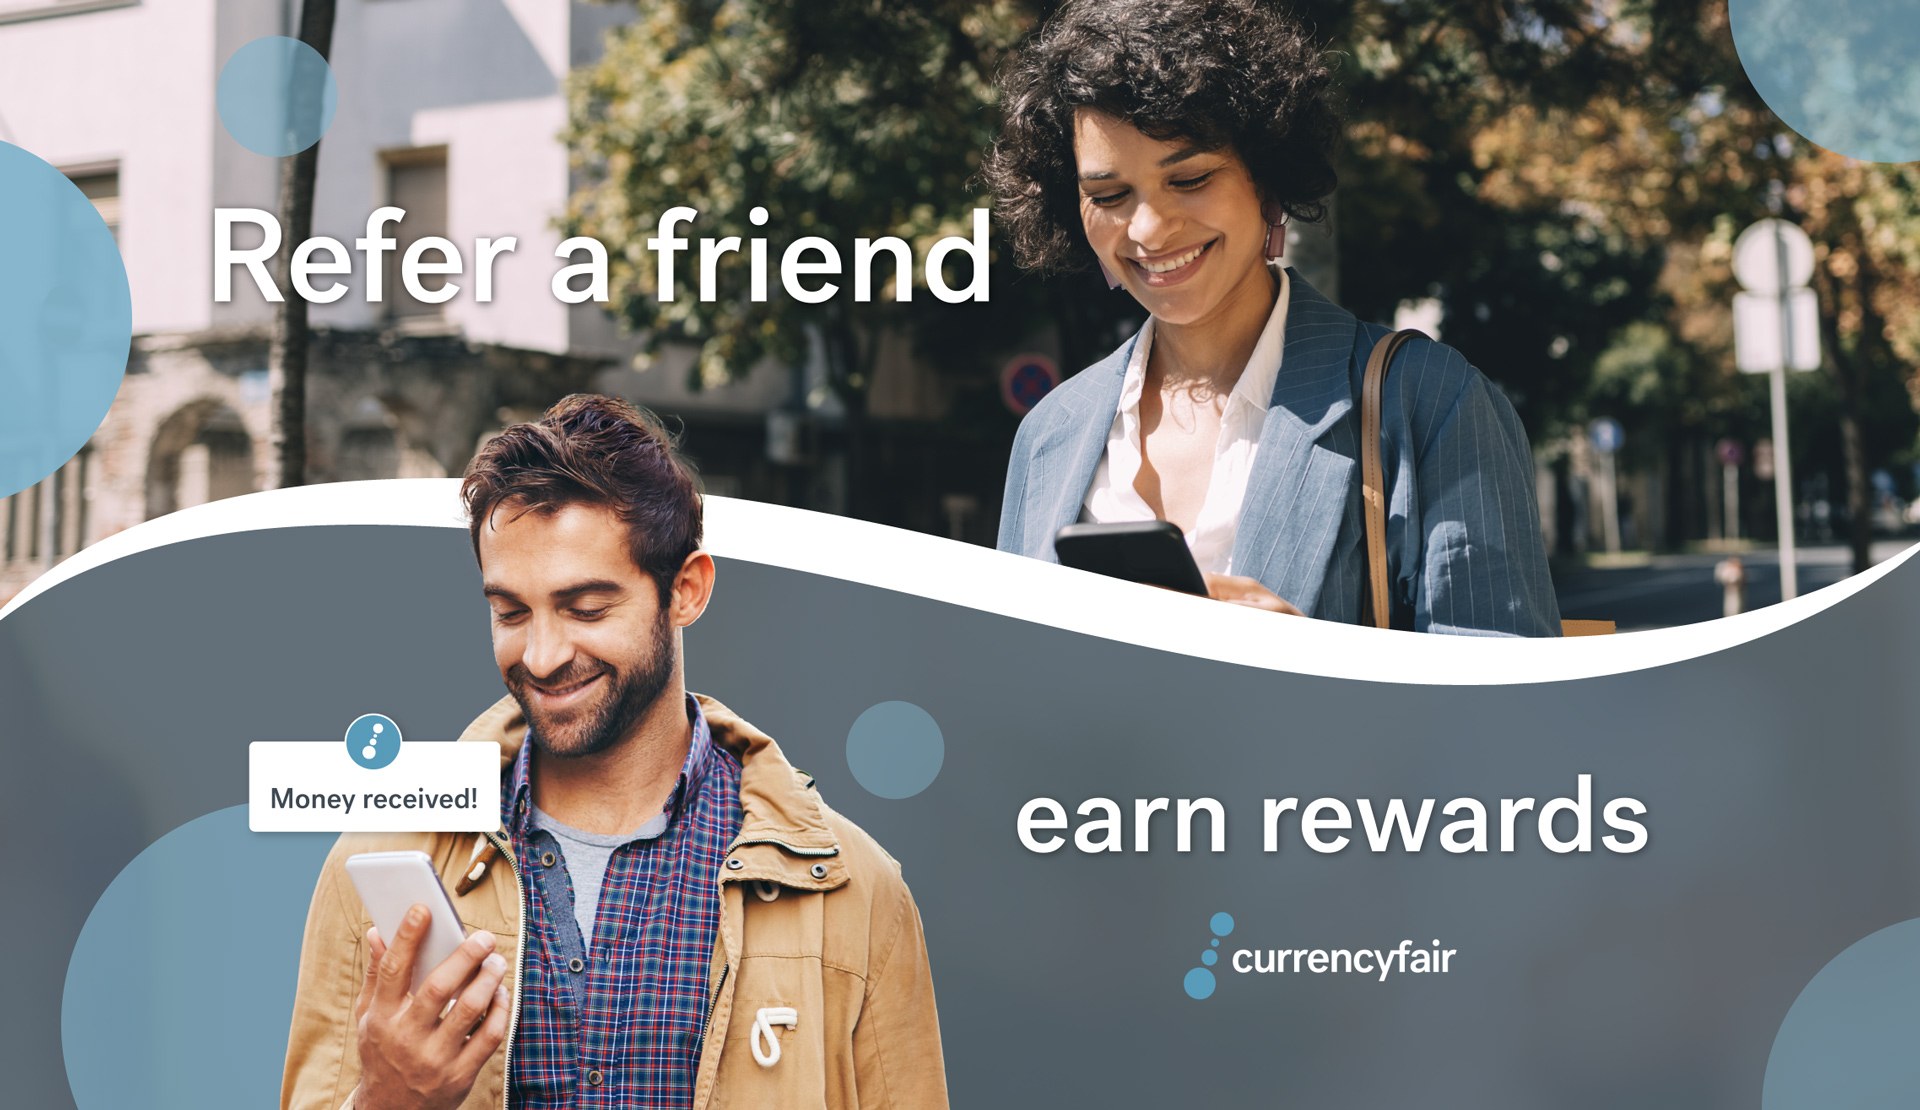 Refer a friend to CurrencyFair for a referral reward each!